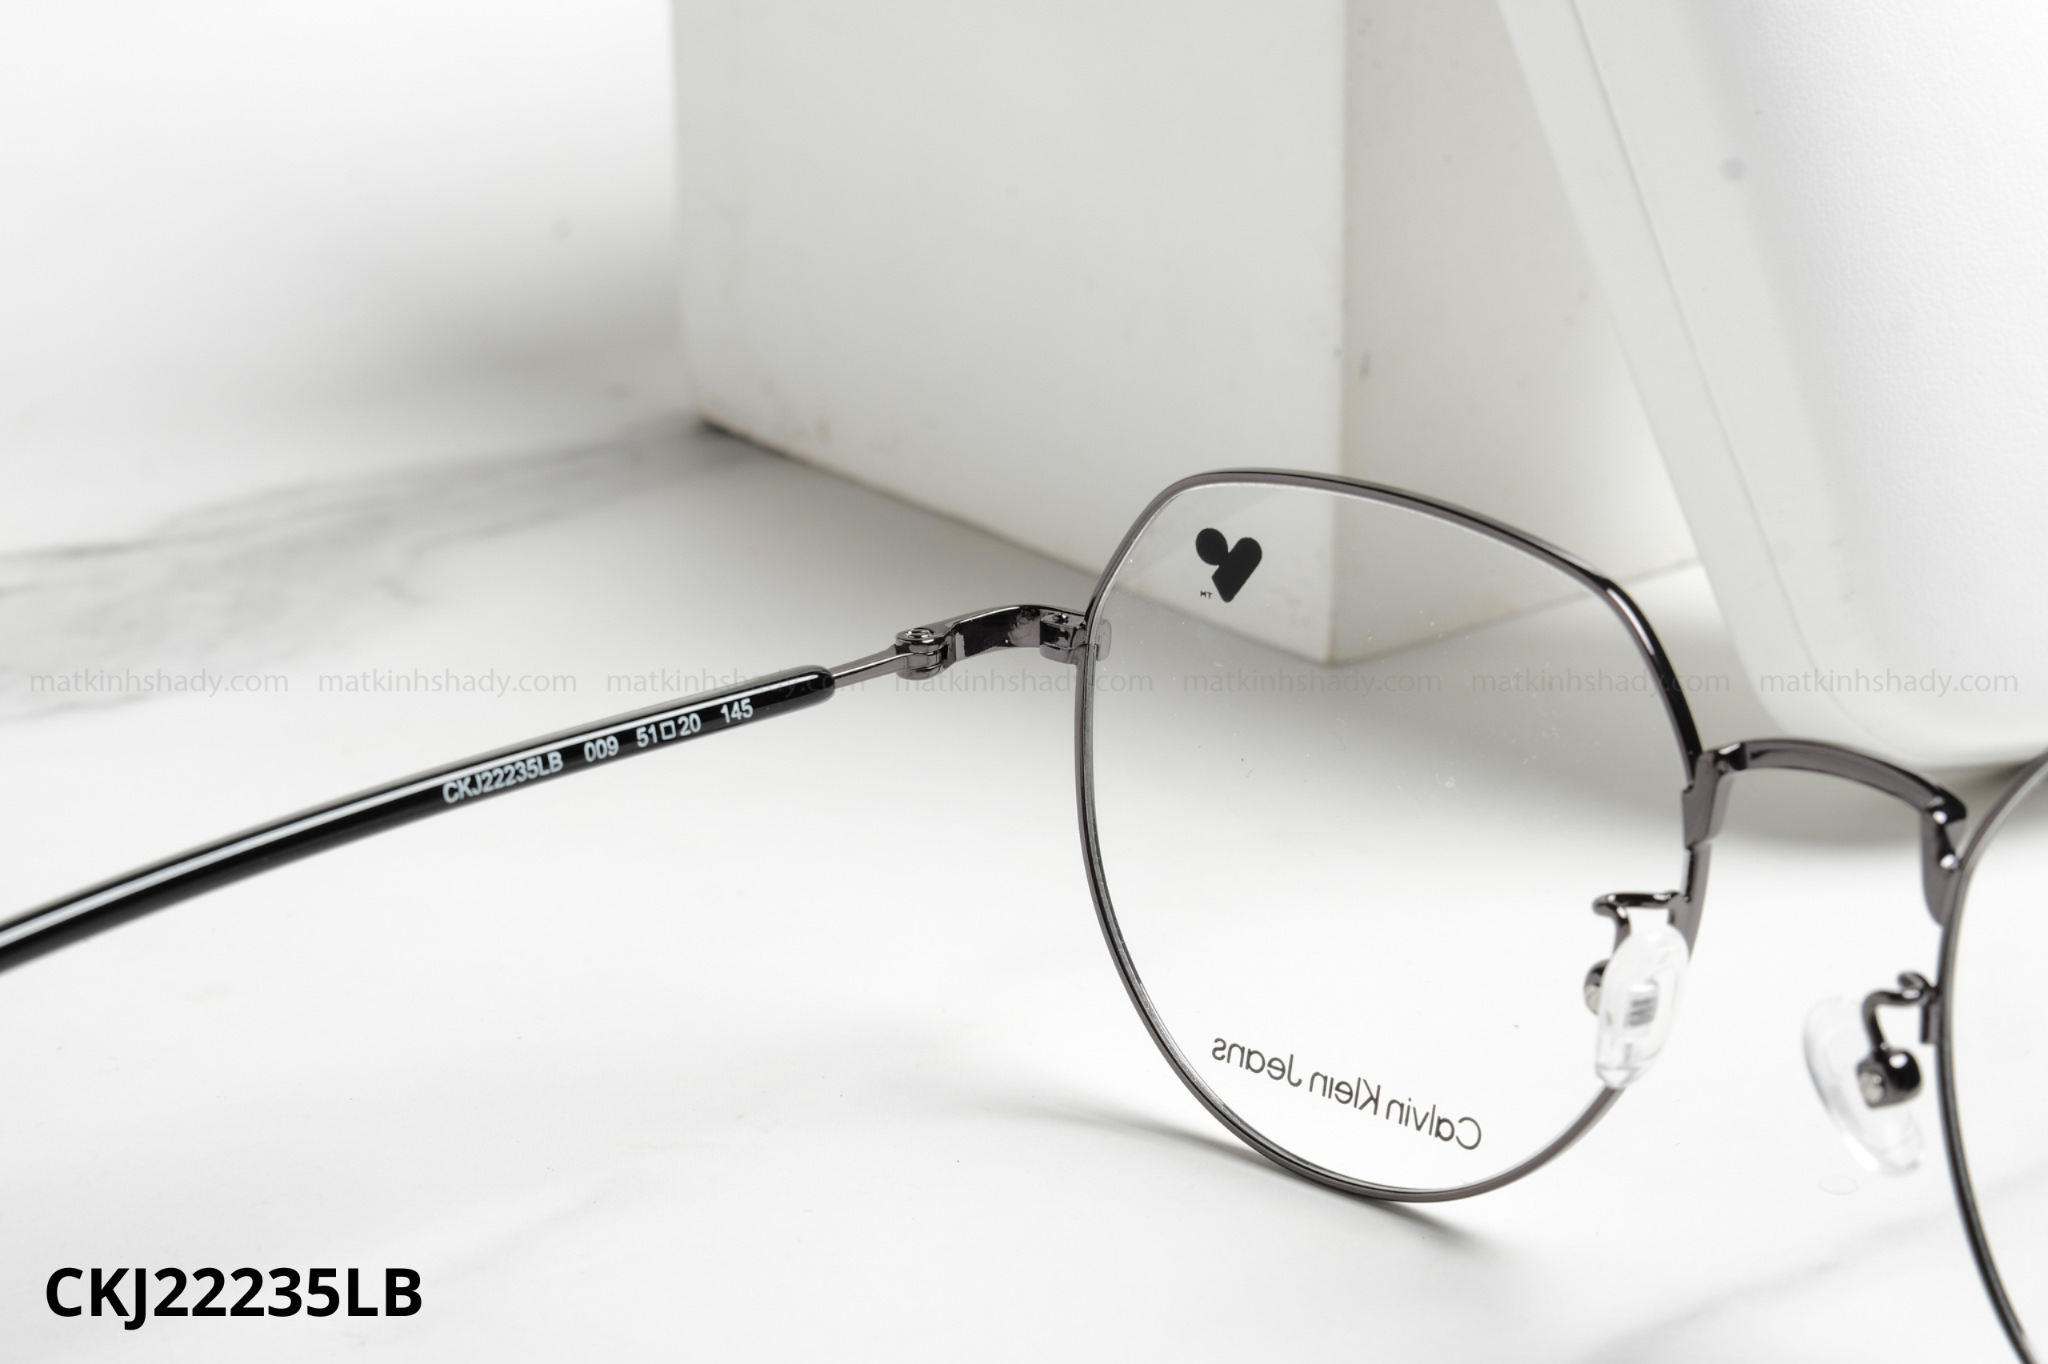  Calvin Klein Eyewear - Glasses - CKJ22235LB 